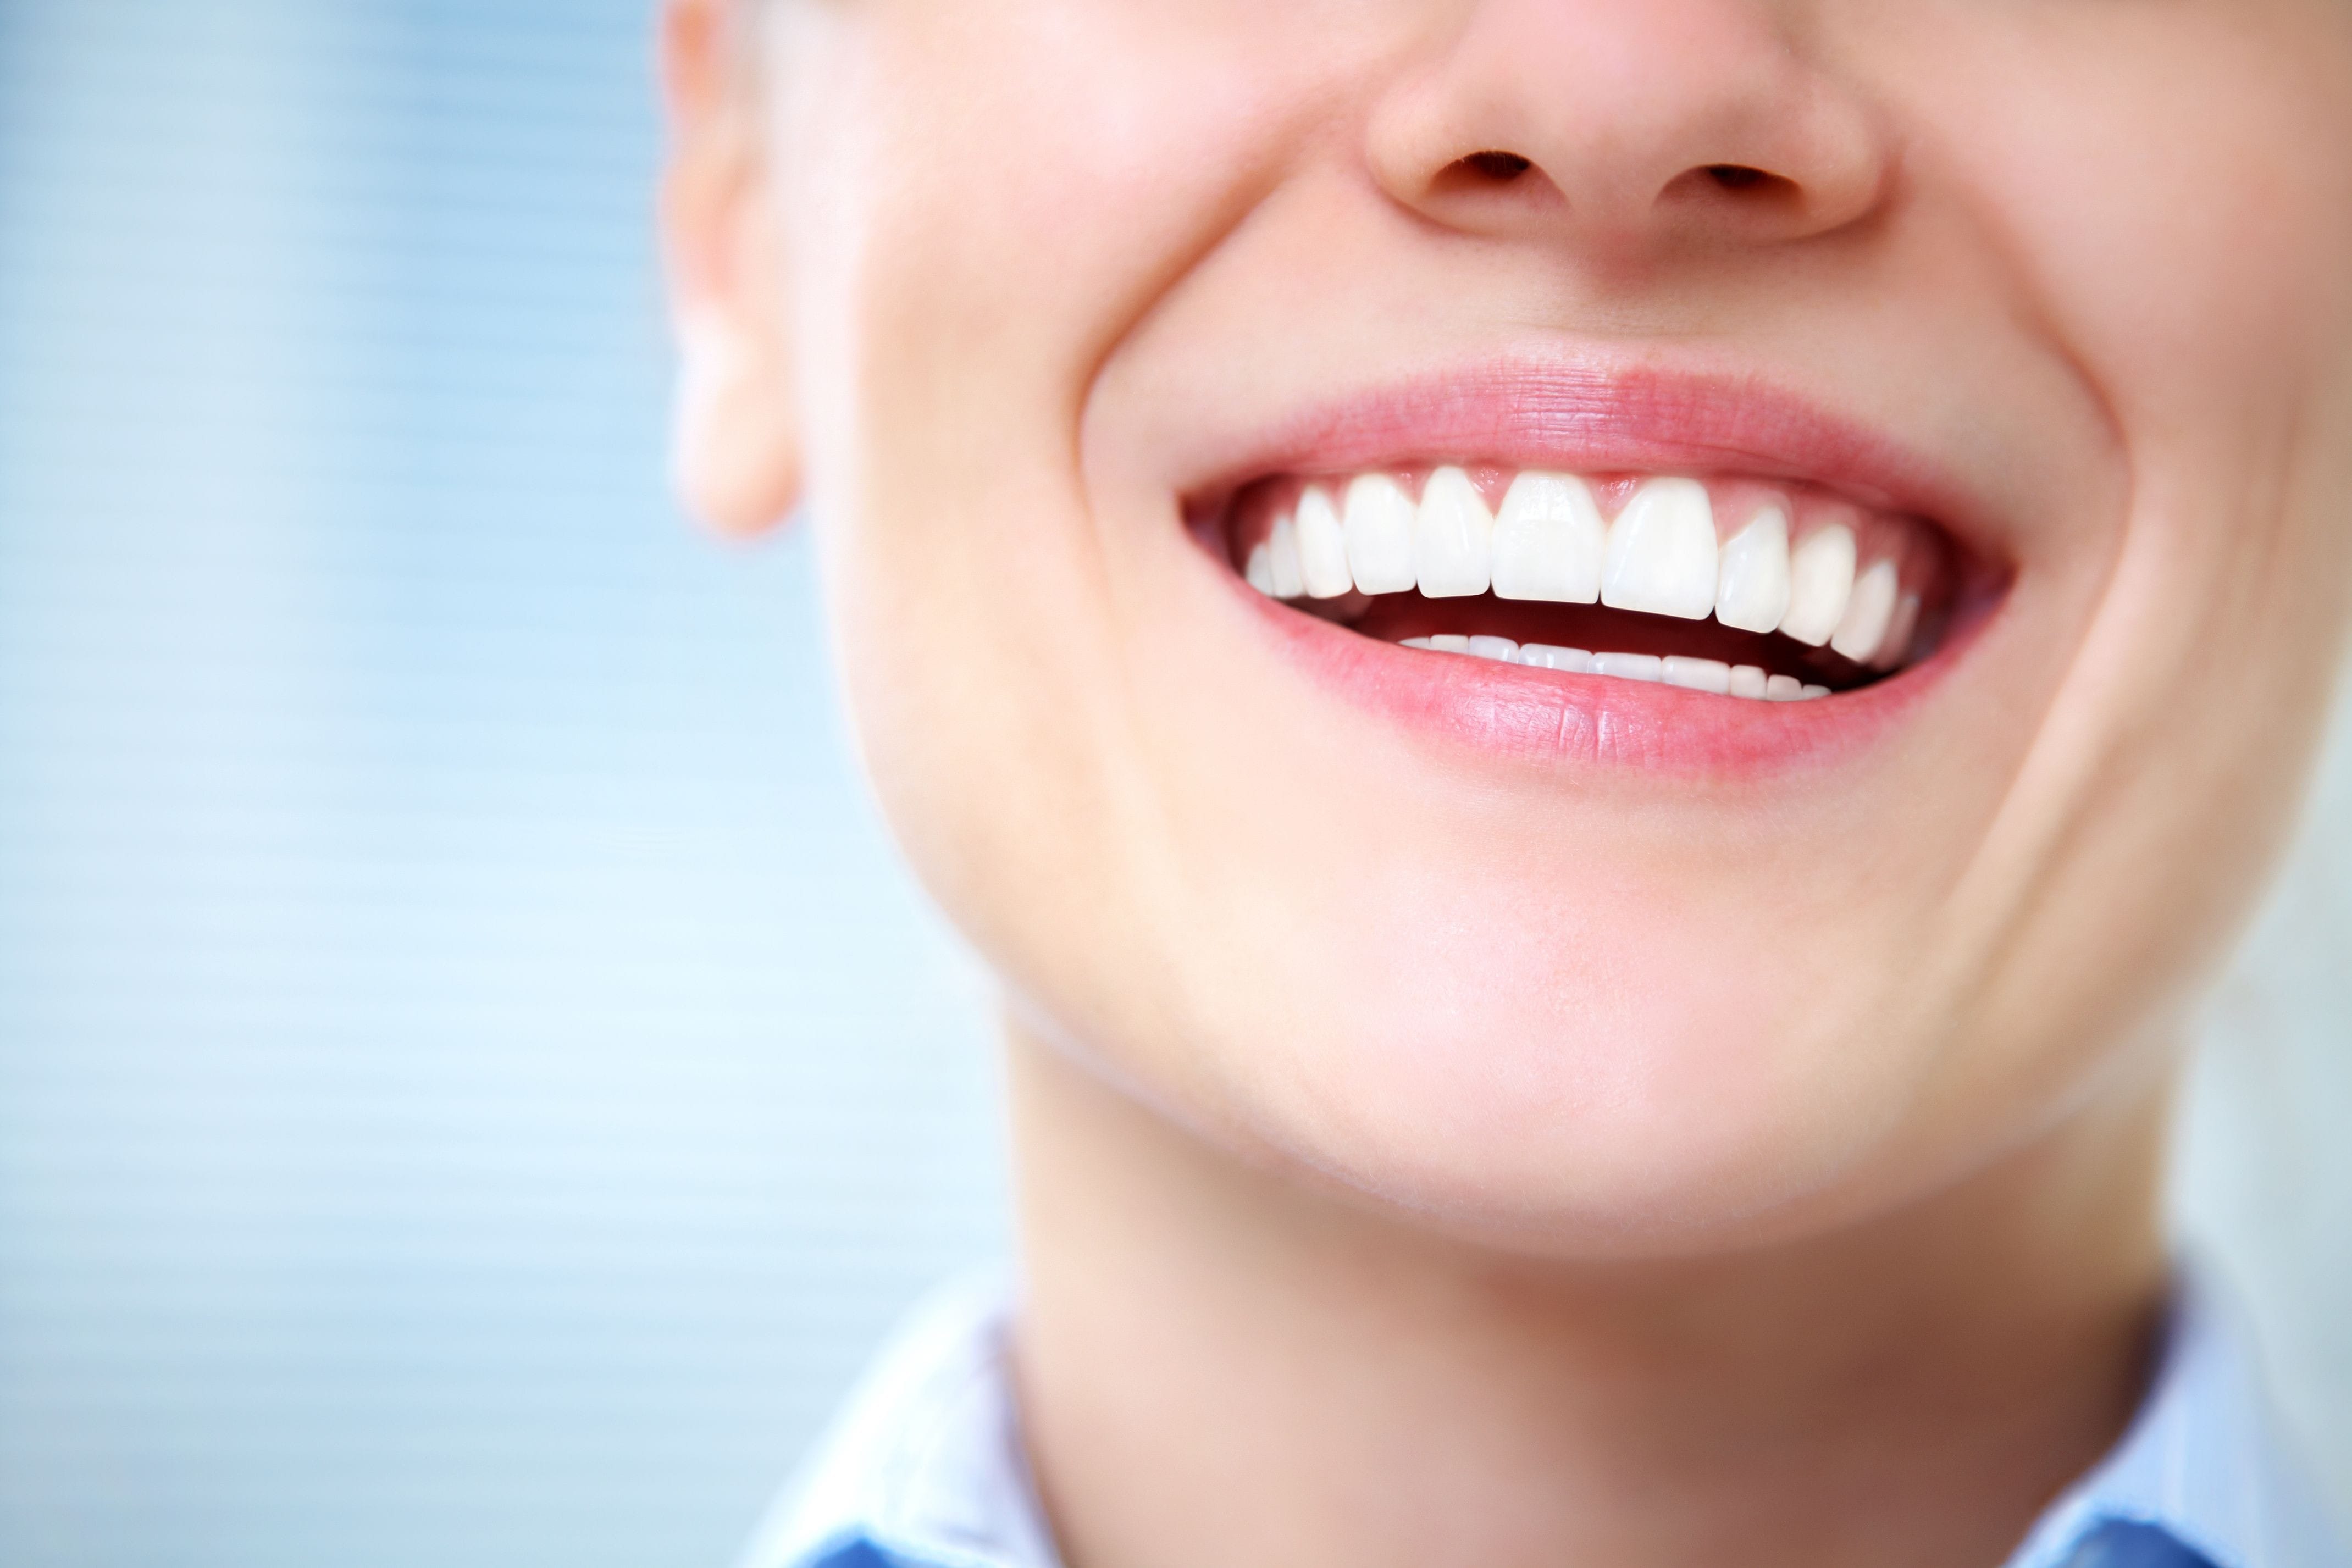 Teeth Whitening
Uppleger Dental